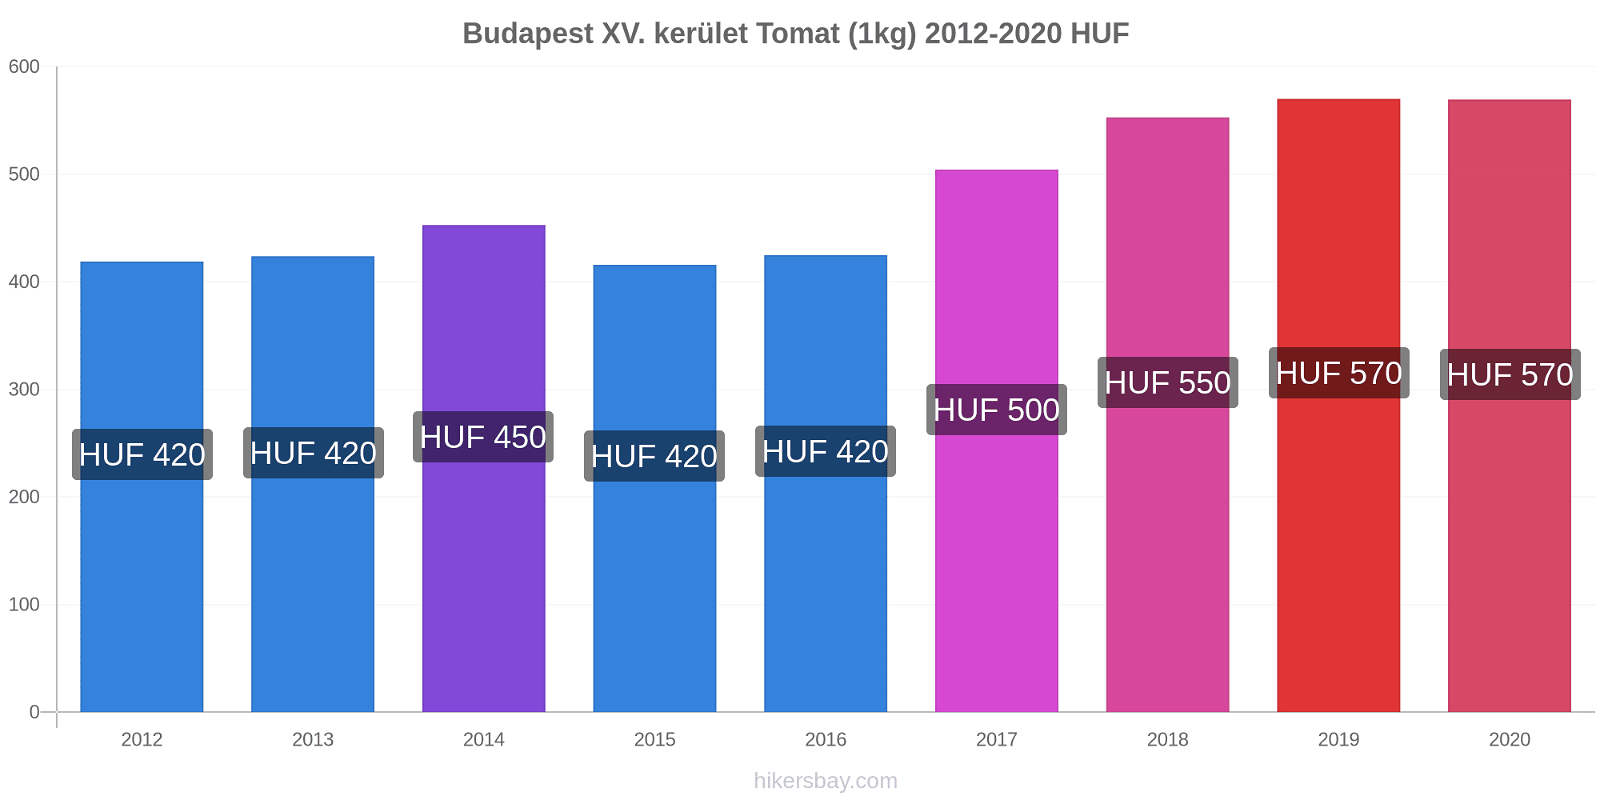 Budapest XV. kerület perubahan harga Tomat (1kg) hikersbay.com